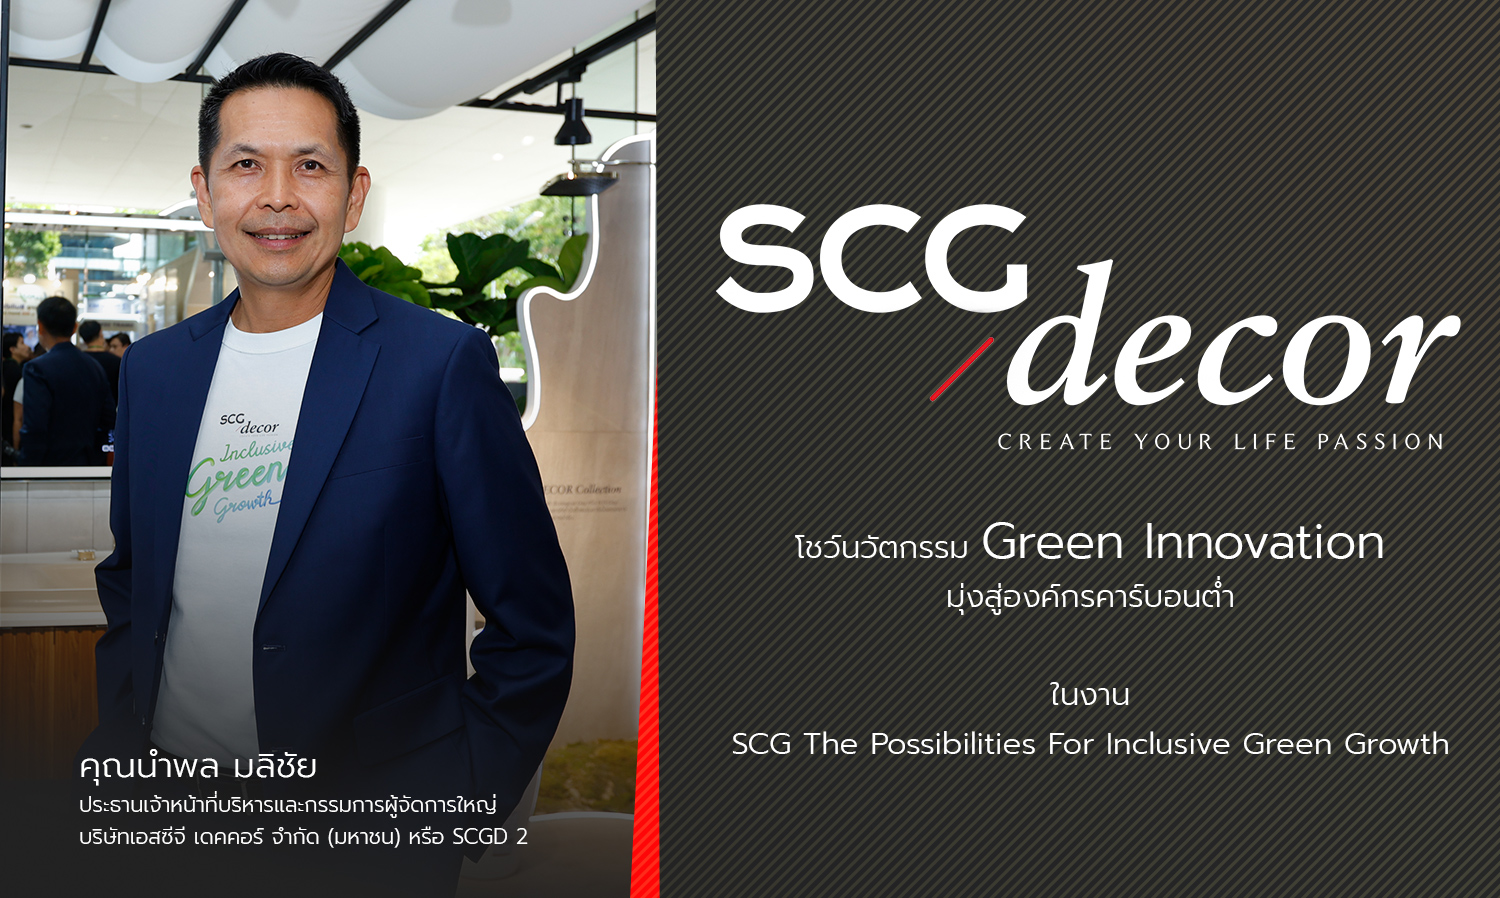 scgd-x-cotto-โชว์นวัตกรรม green-innovation มุ่งสู่องค